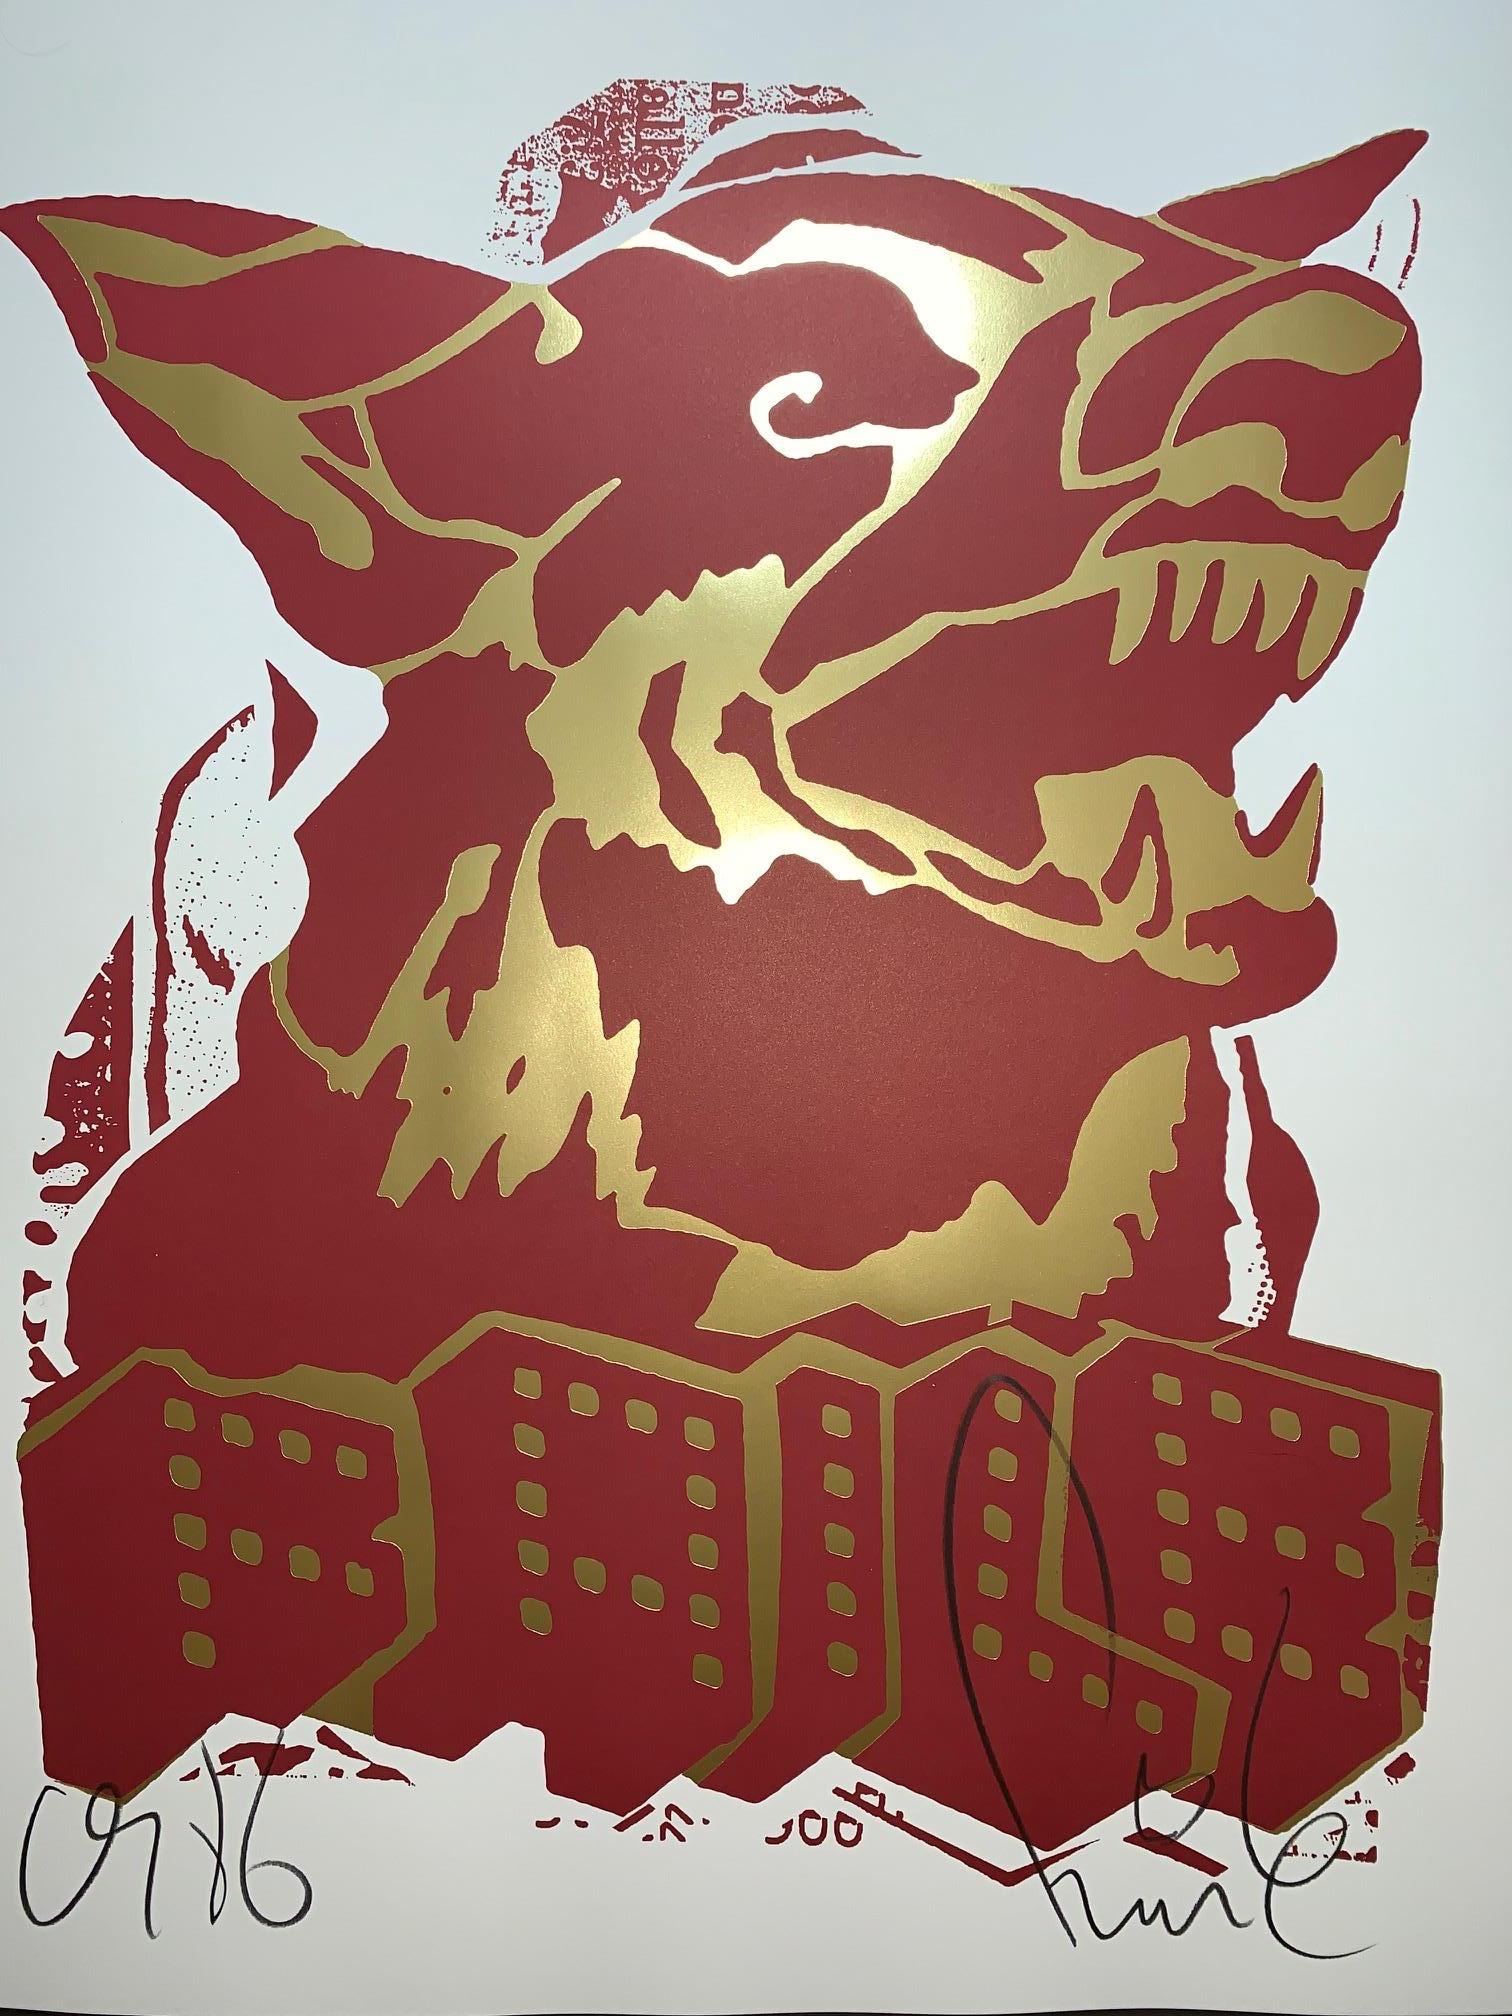 Faile Animal Print - FAILE DOG 2018 Red And Gold Edition Gold Metallic Inks Pop Art Street Art Urban 